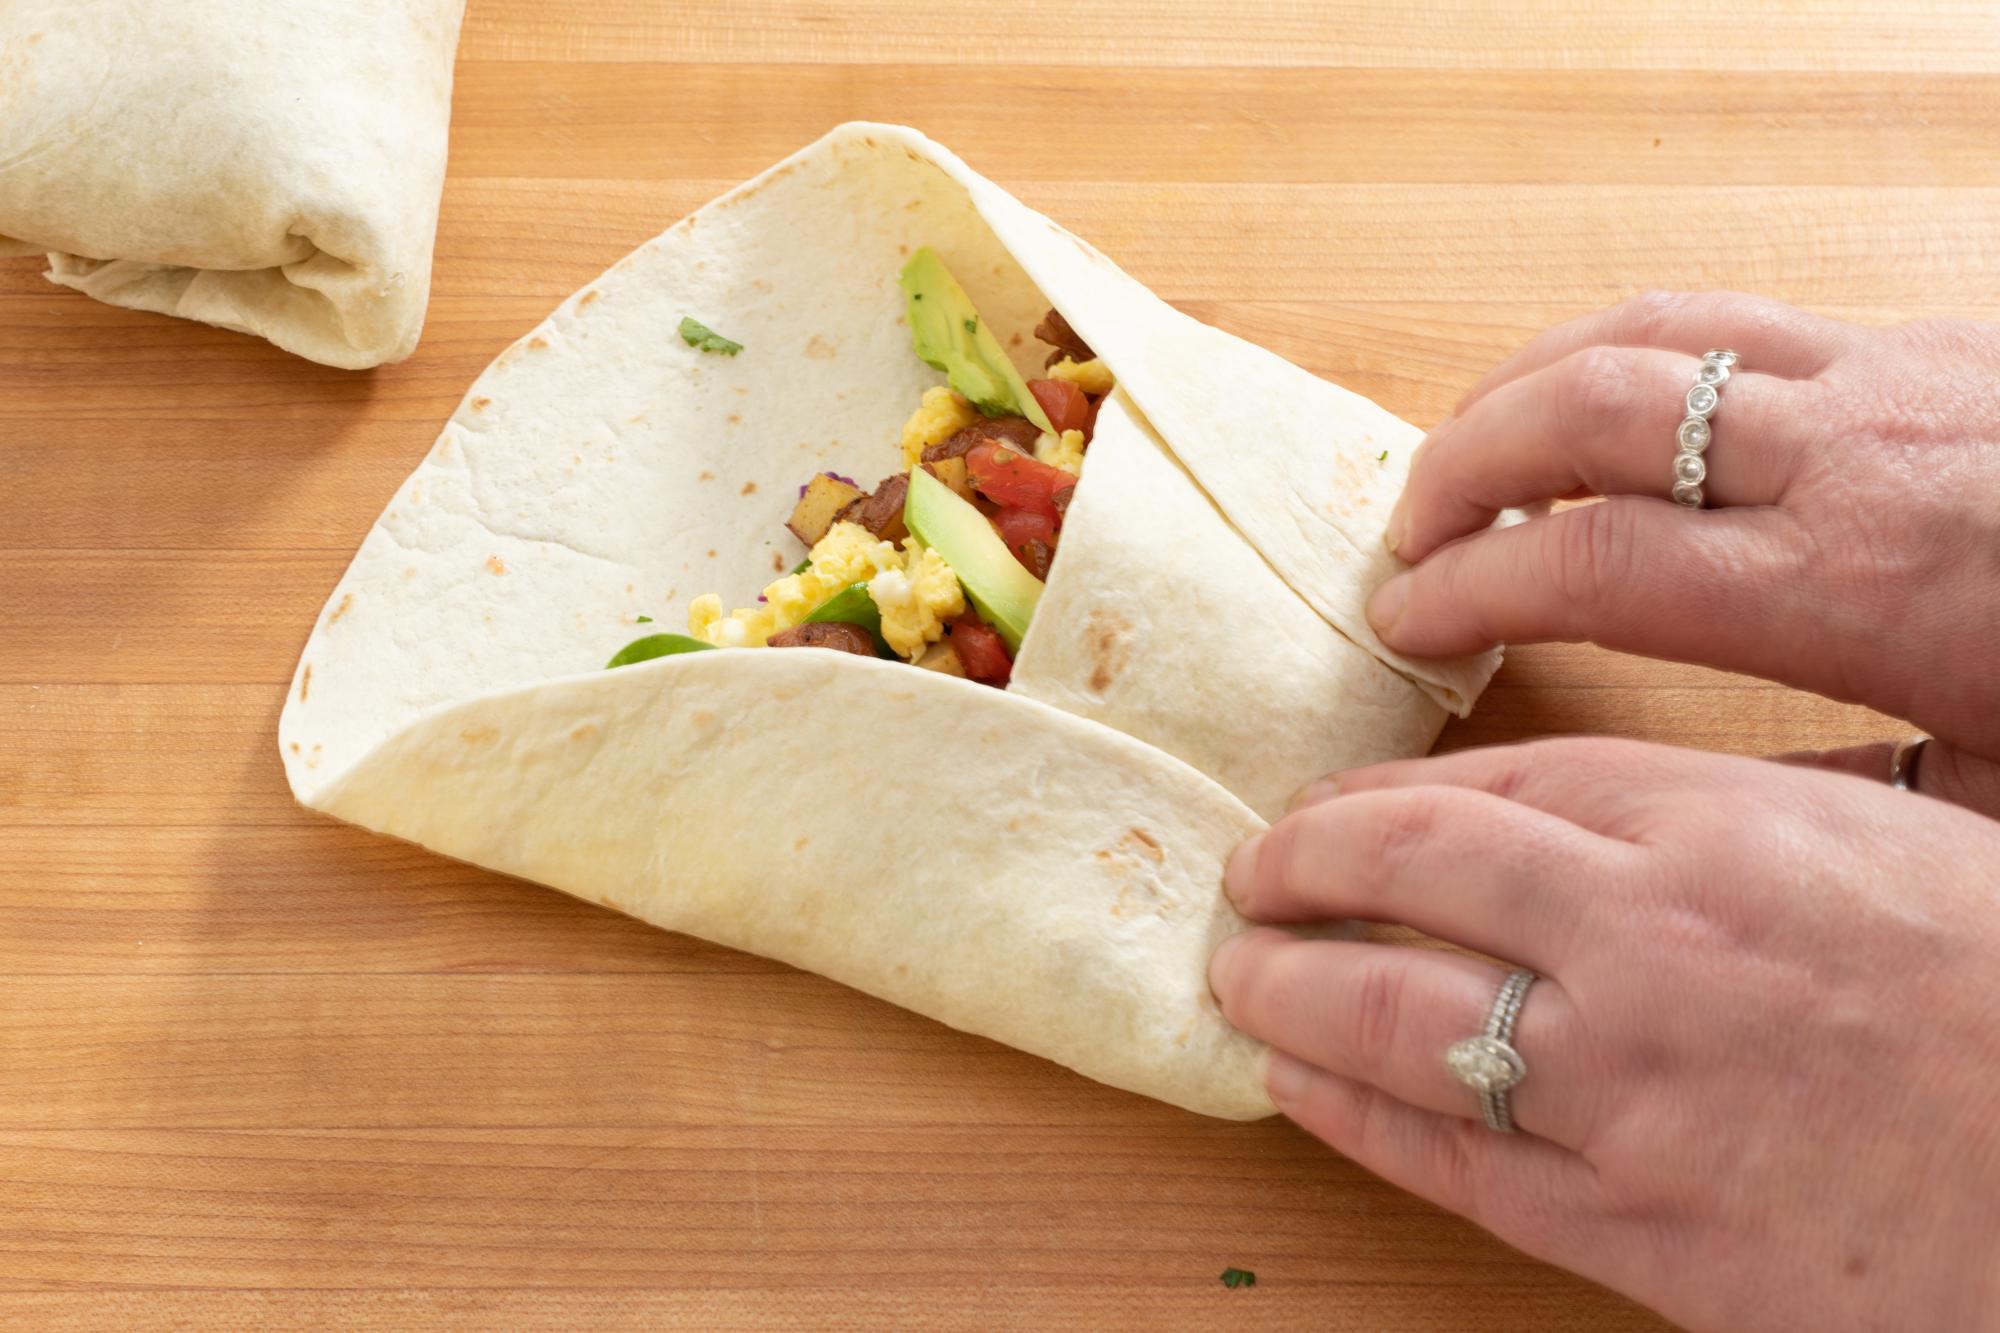 Folding up the burrito.